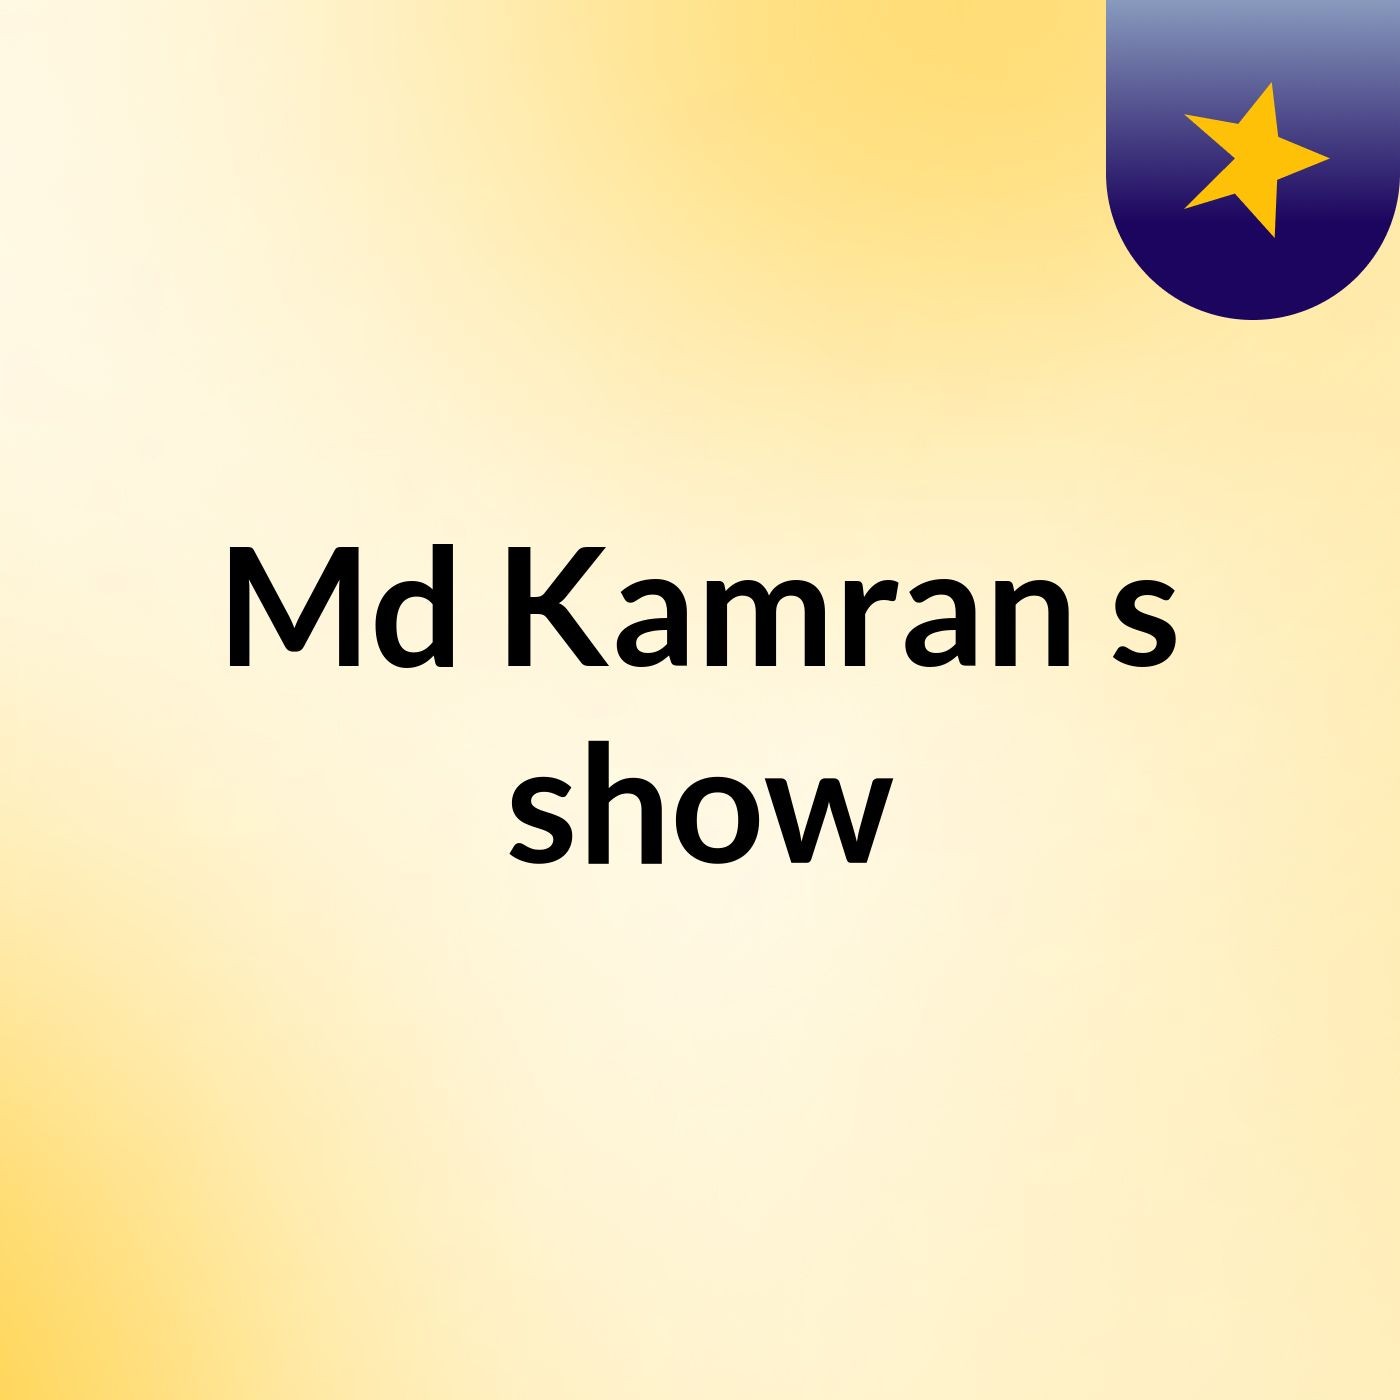 Md Kamran's show